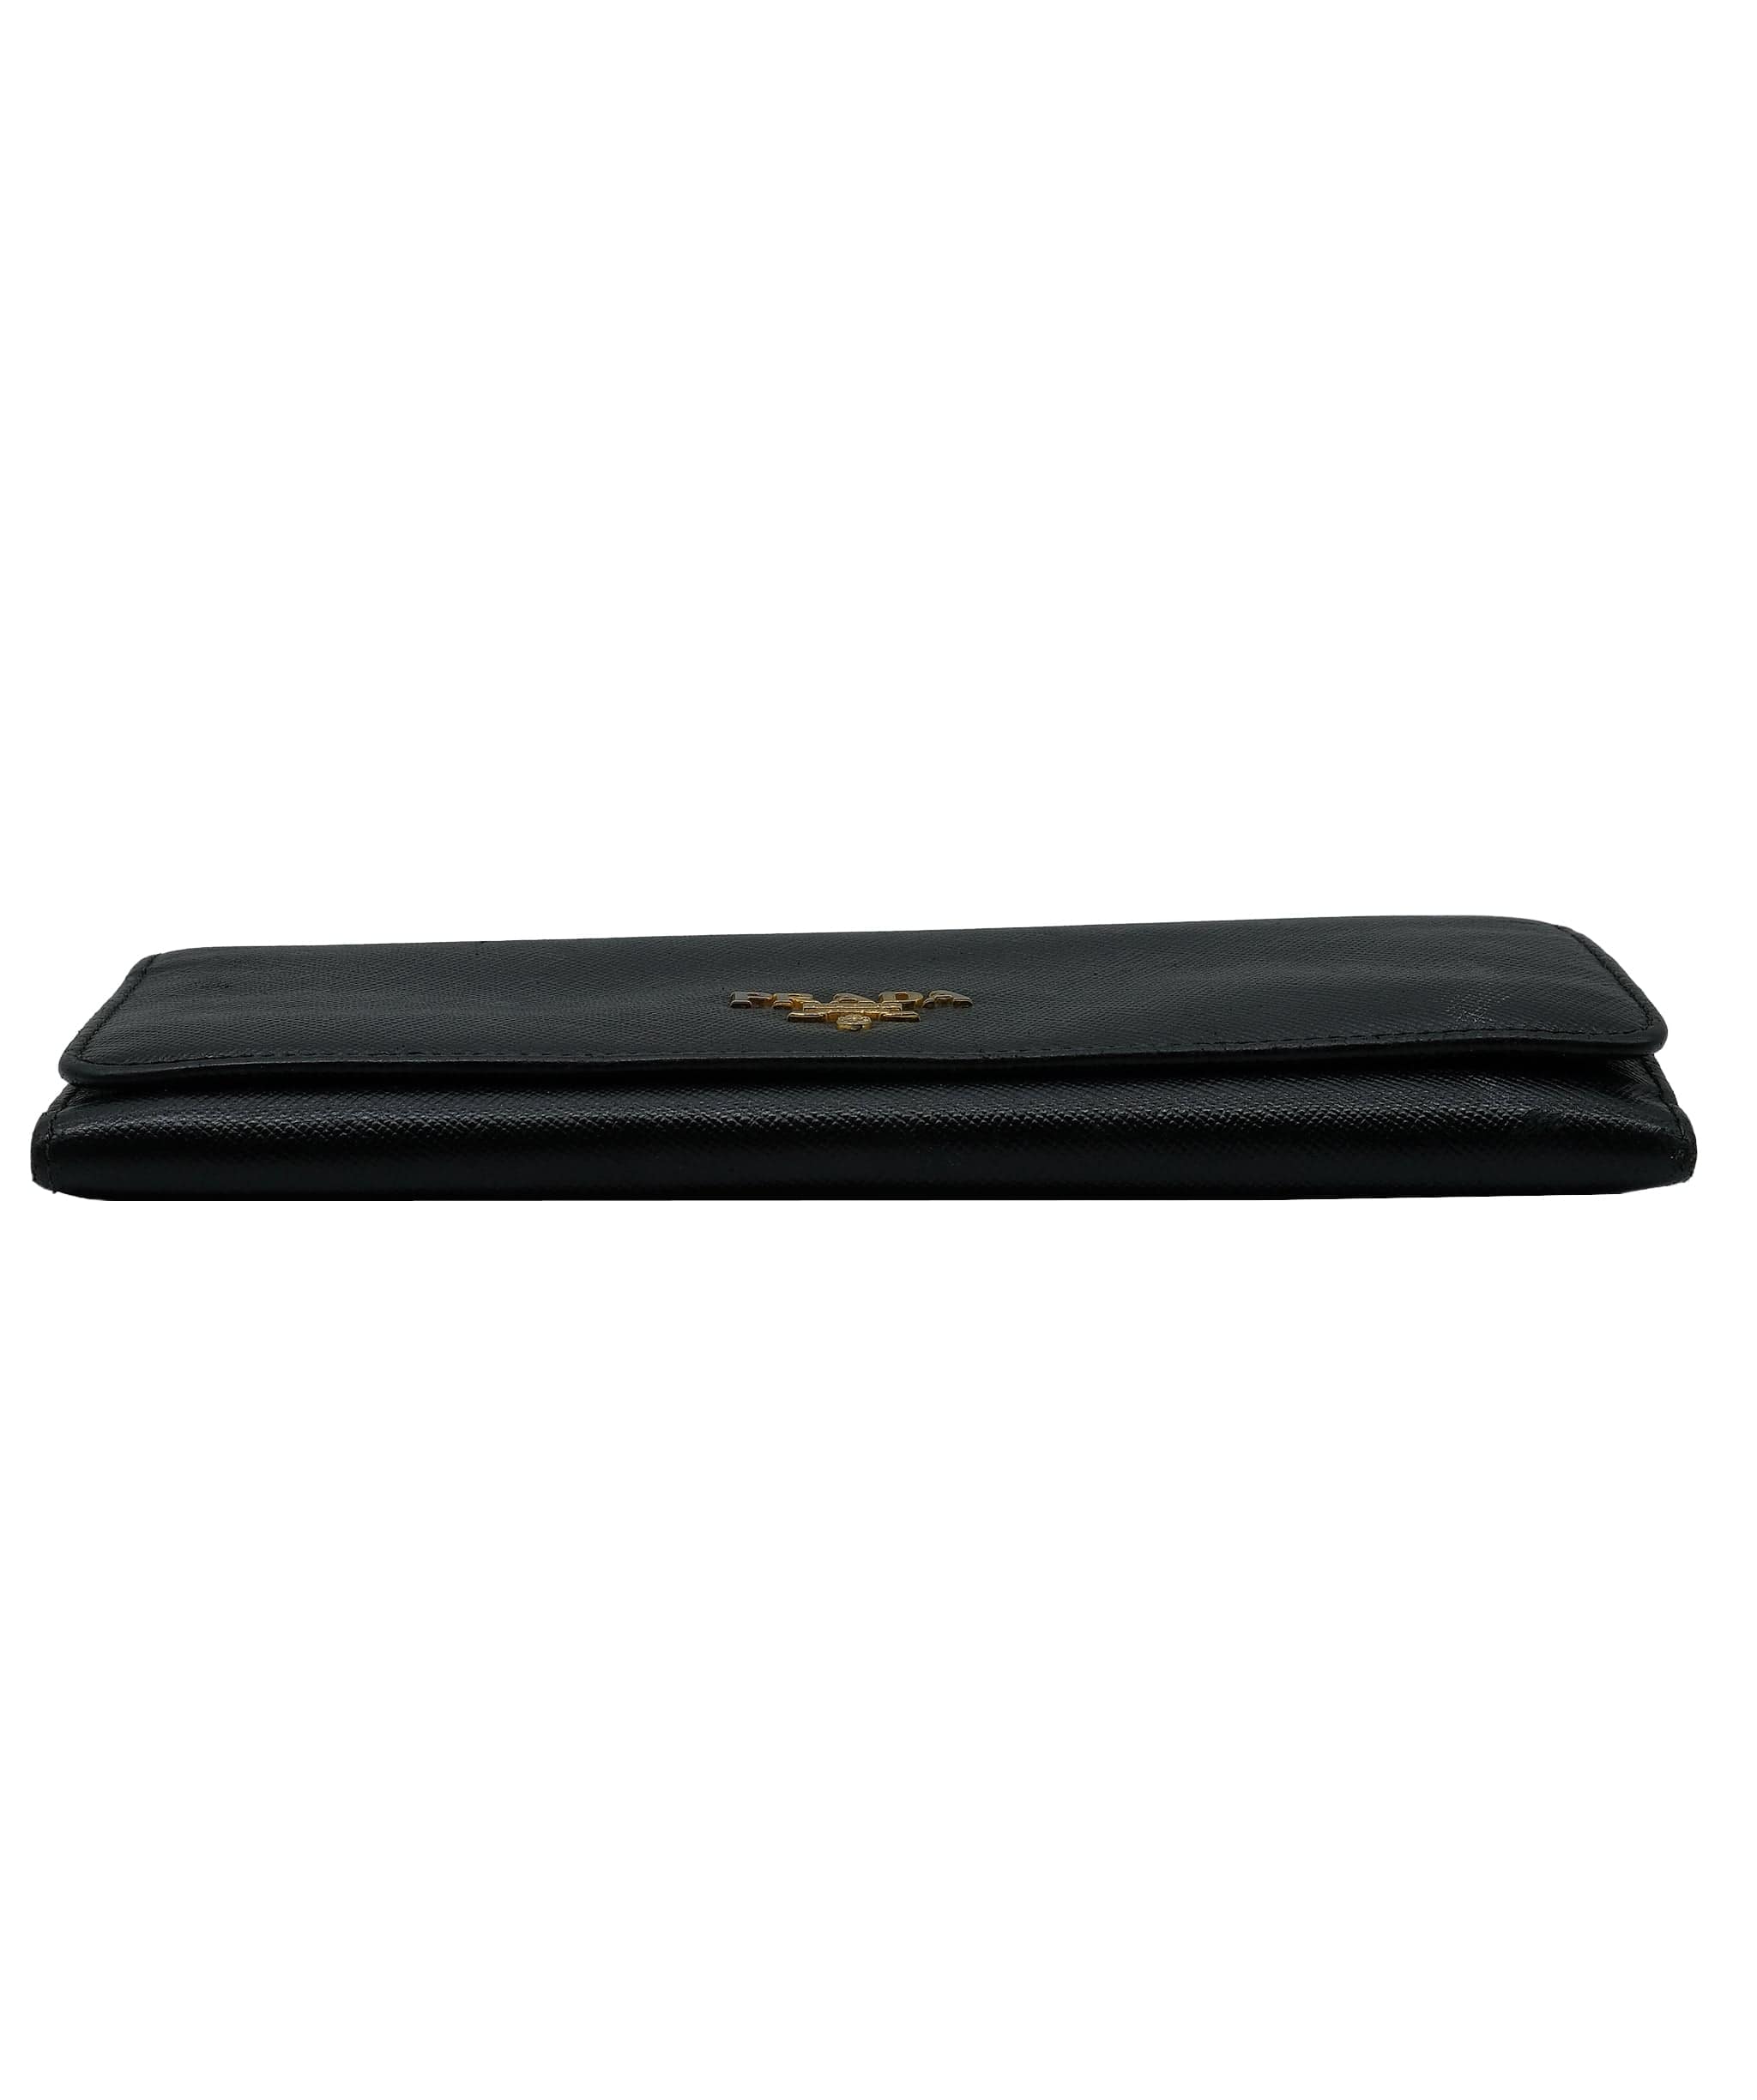 LuxuryPromise Prada wallet Black Saffiano RJC3051